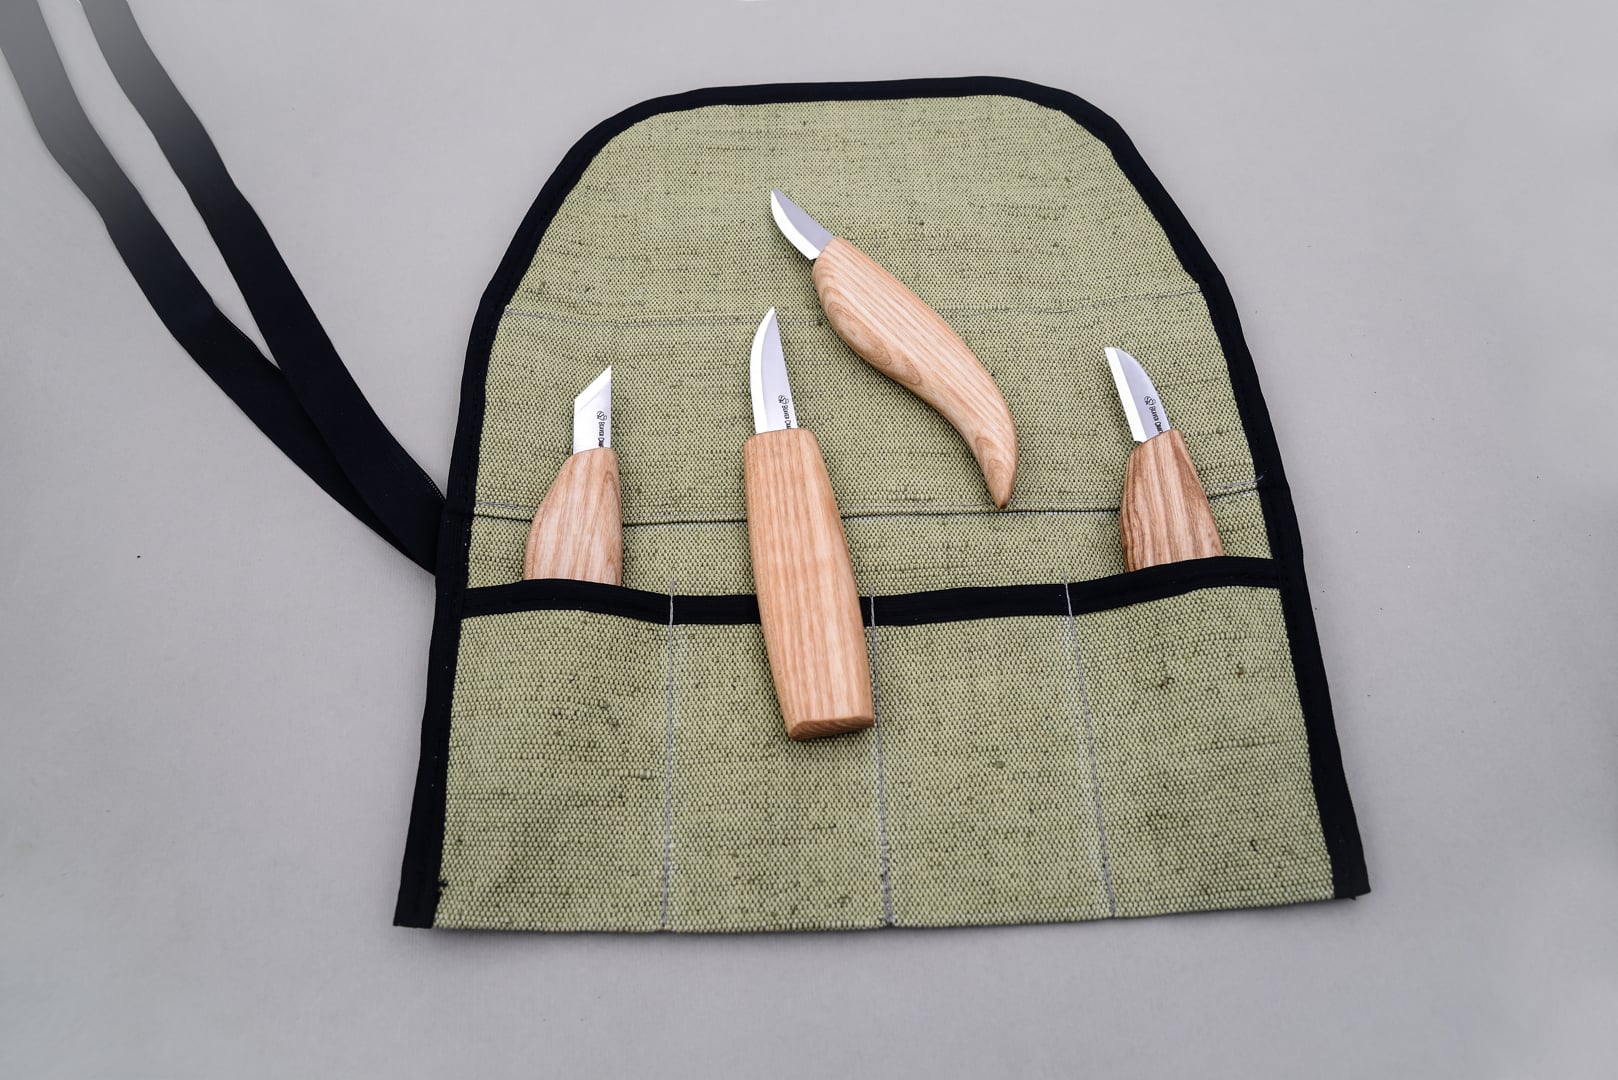 Striking knife woodworking & marking & scribing knife - BeaverCraft –  BeaverCraft Tools